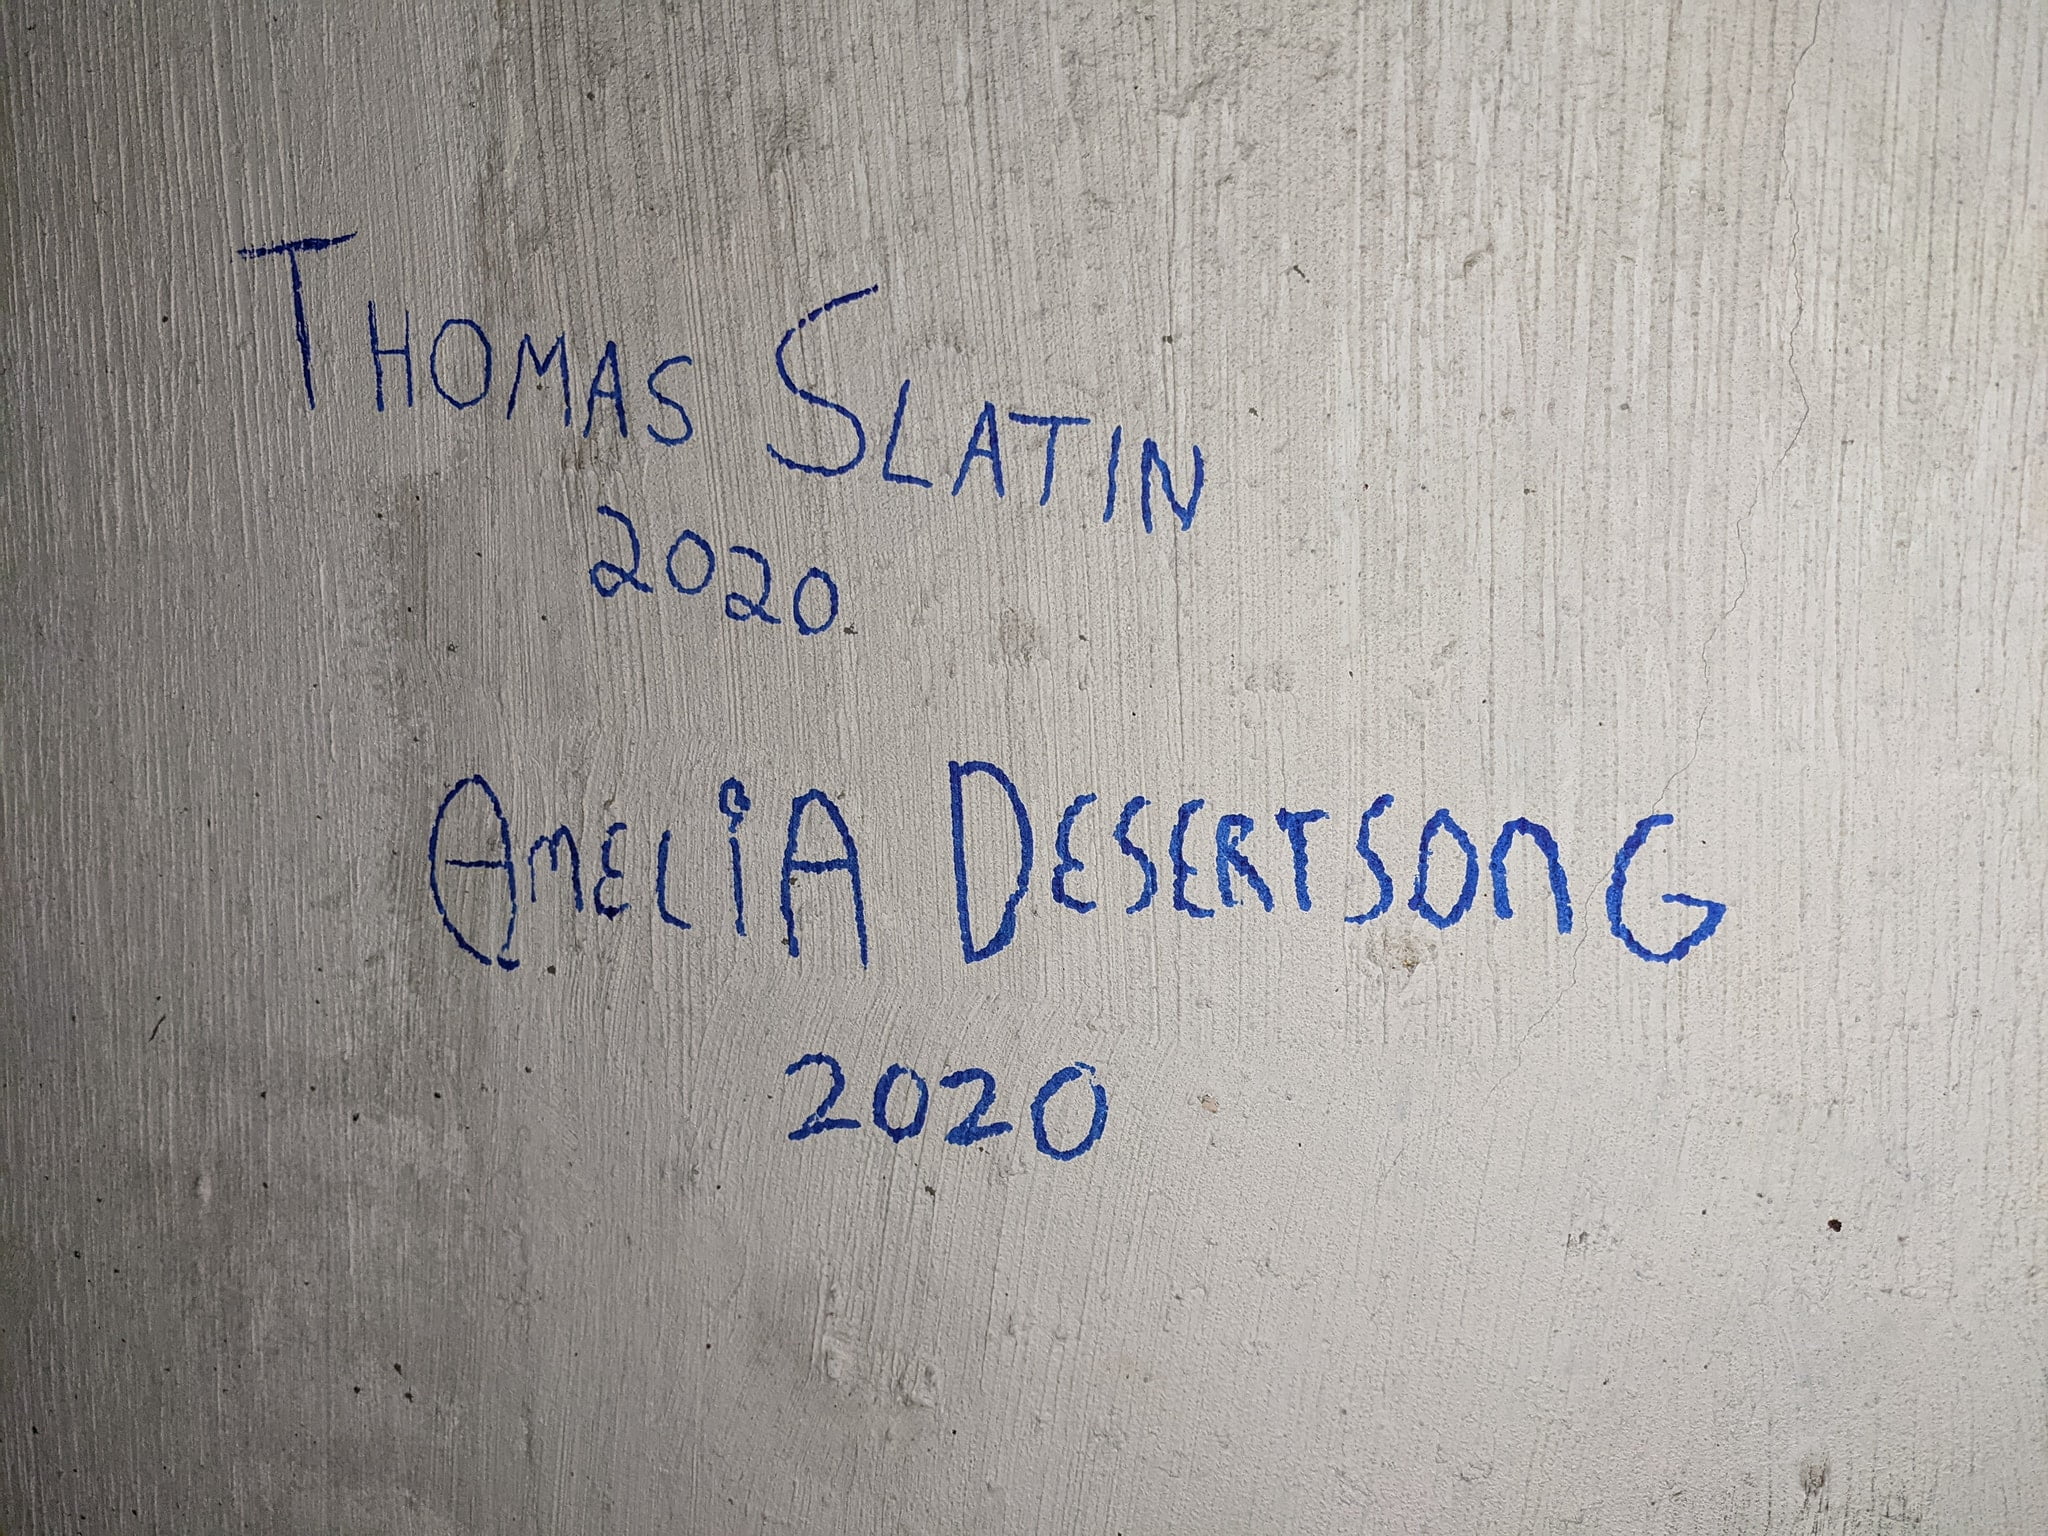 Thomas Slatin & Amelia Desertsong